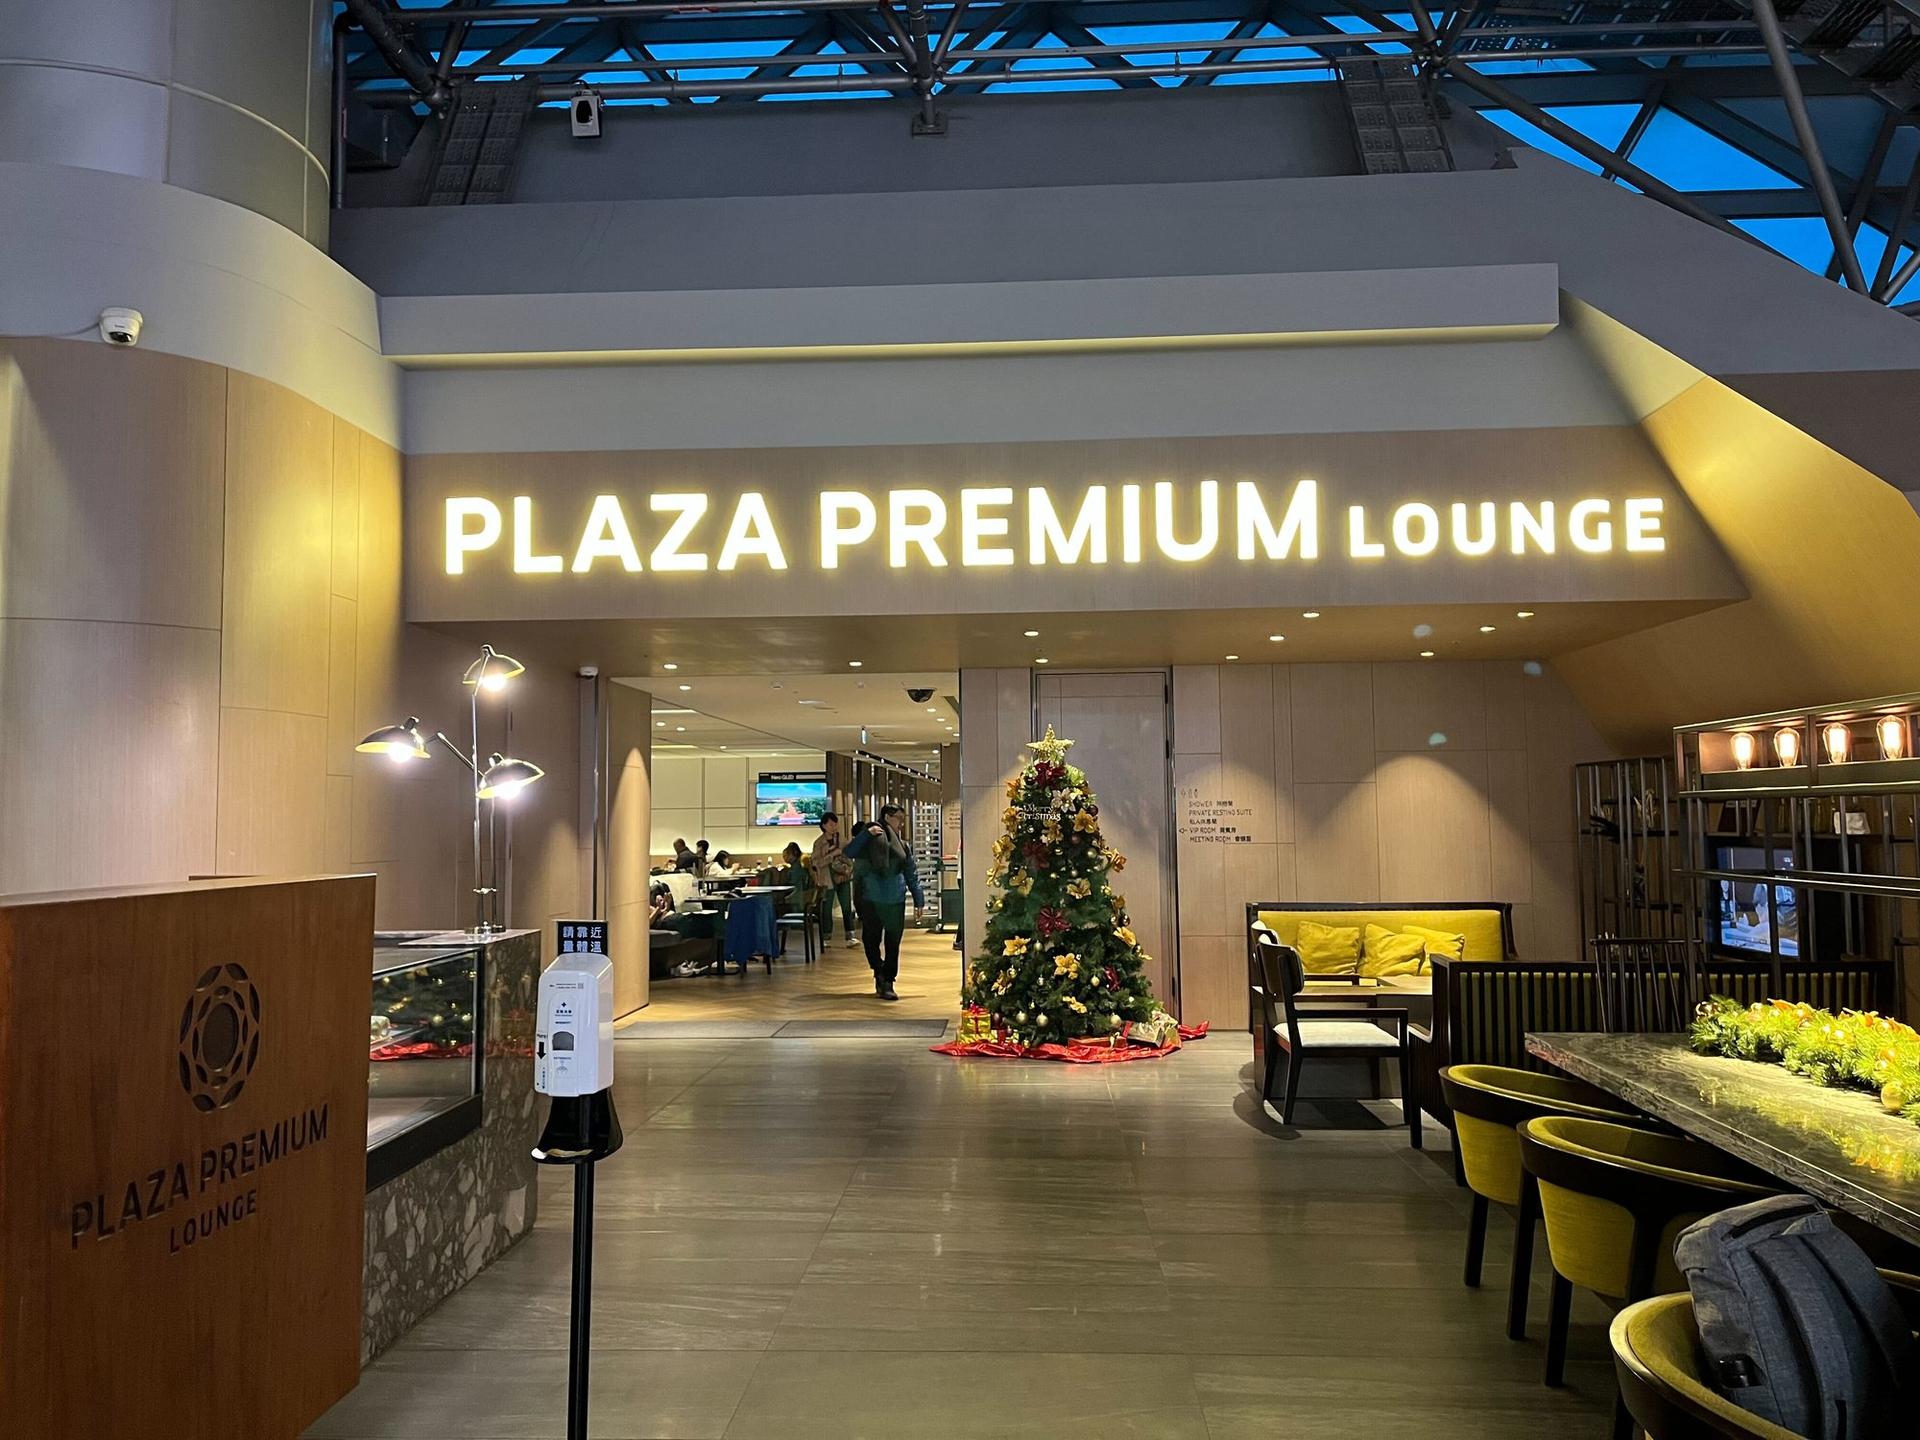 Plaza Premium Lounge (Zone A) image 92 of 99